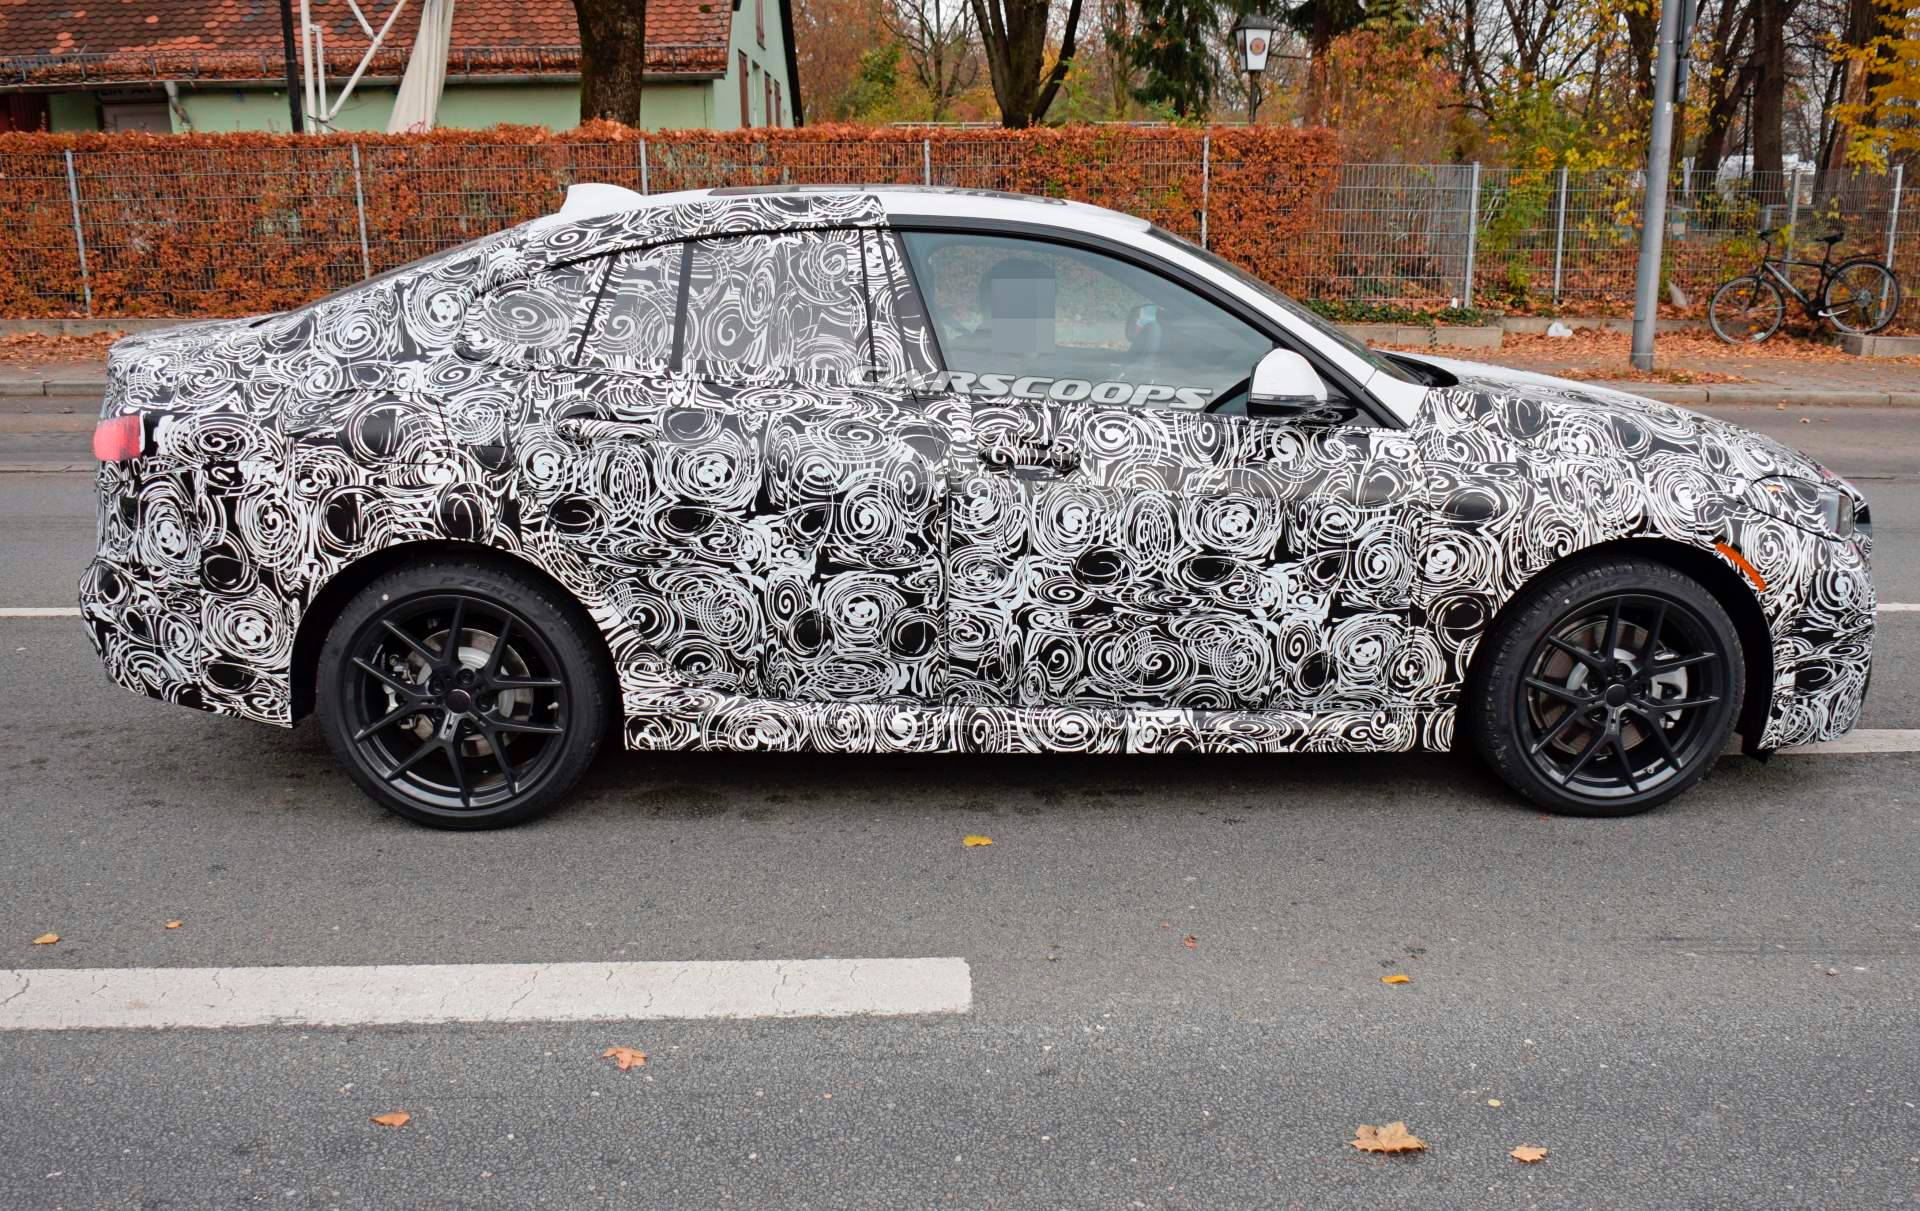 2020 BMW 2 Serisi Gran Coupe resim galerisi (17.03.2019)